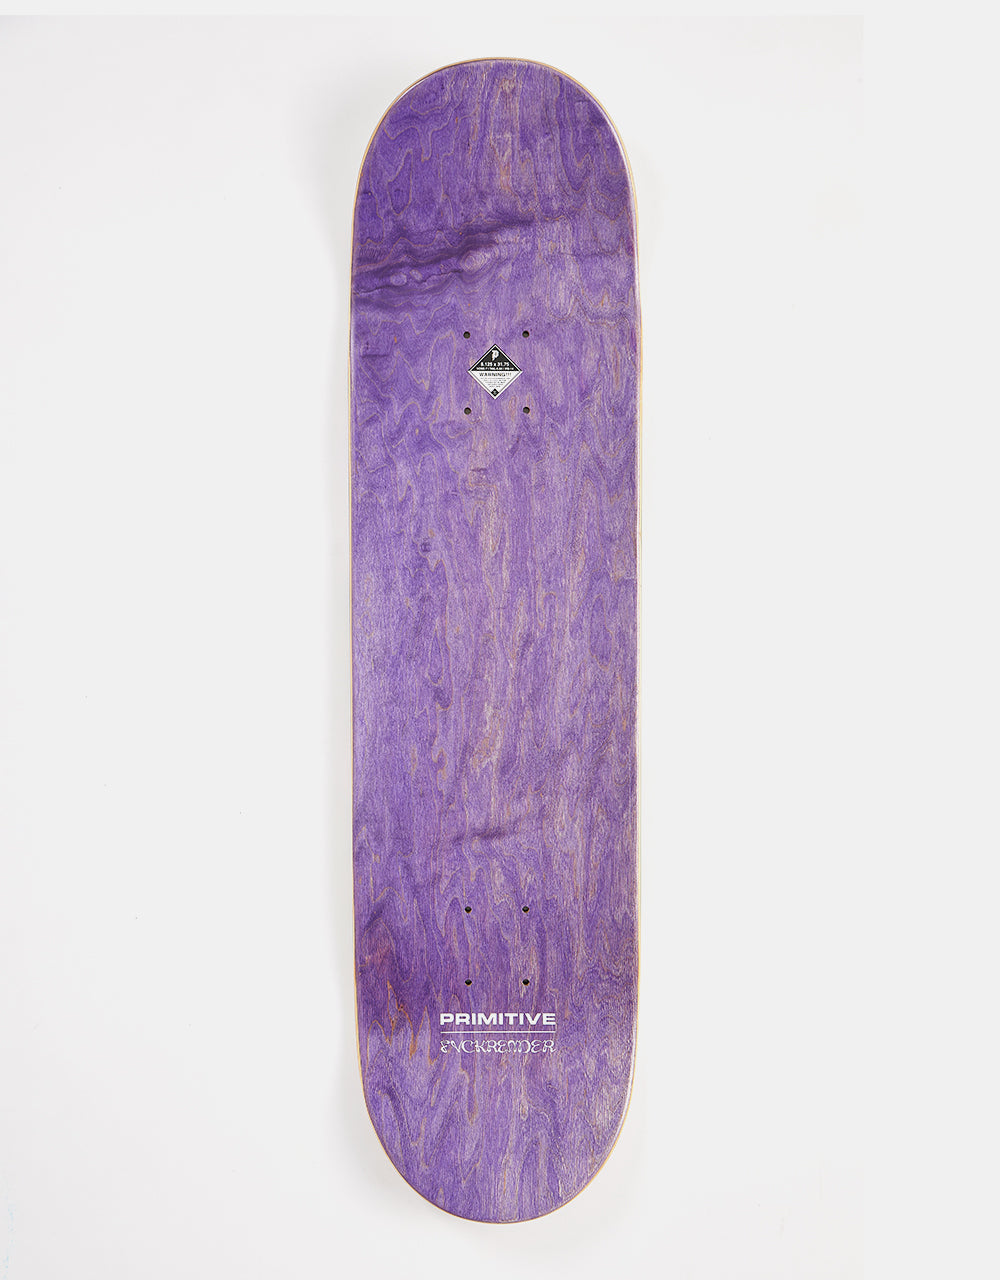 Primitive McClung Poison Skateboard Deck - 8.125"